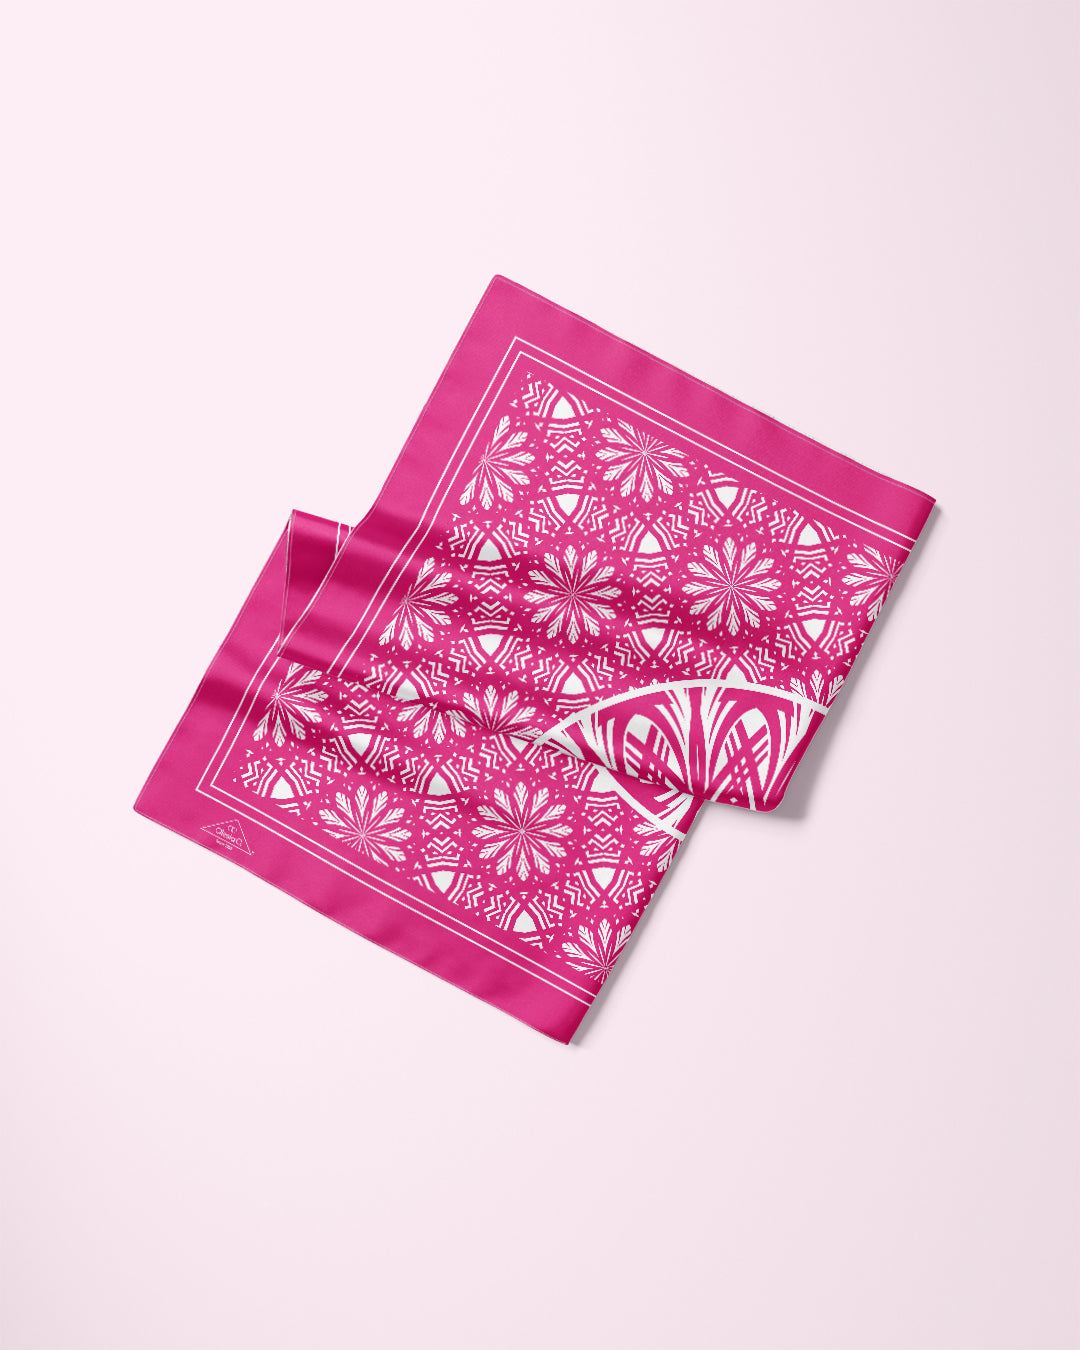 PINK SERENITY Mandala Designer Silk Scarf  Pink White Art A Porte by Alesia Chaika